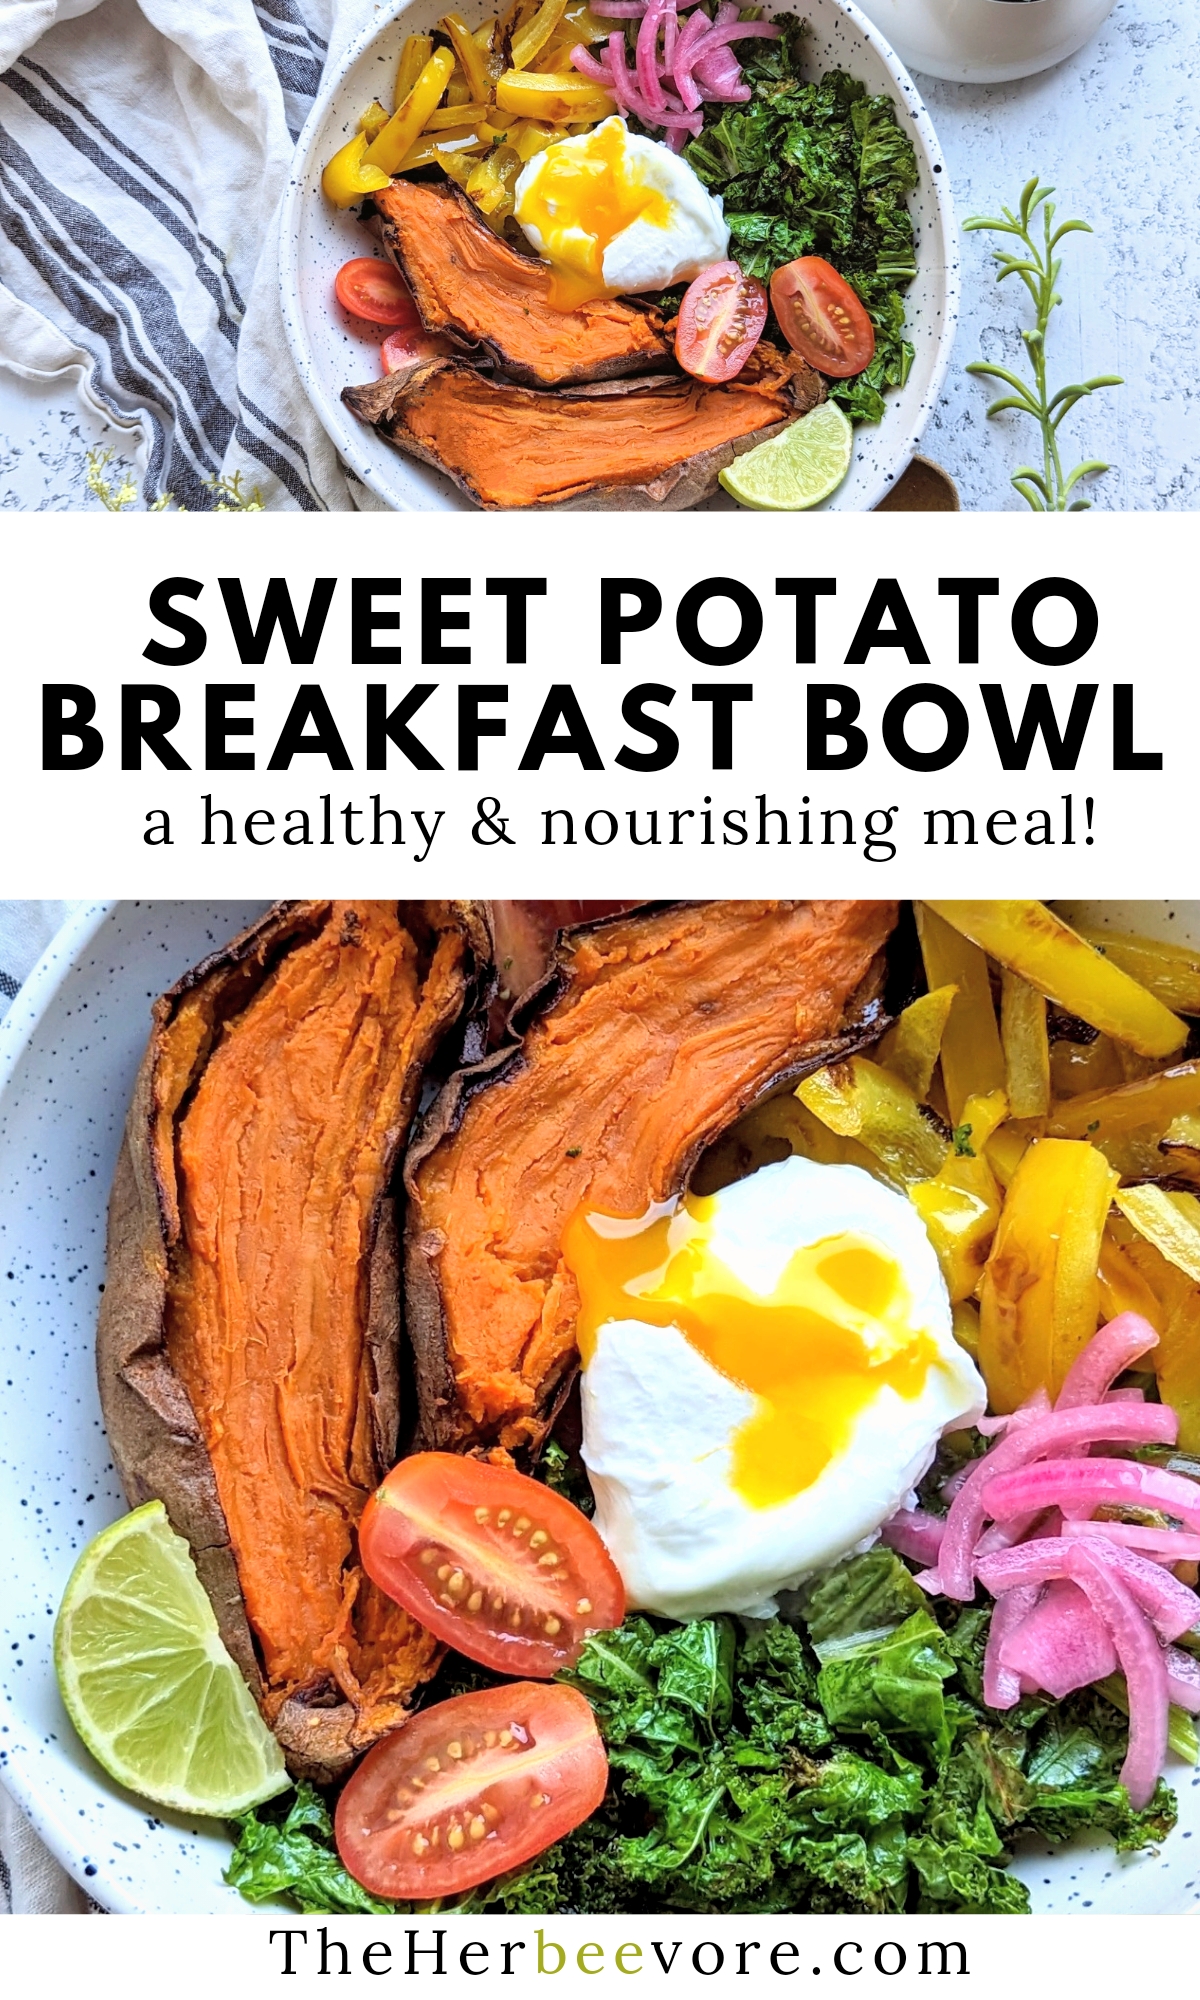 sweet potato breakfast bowl recipe a healthy brunch idea and nourishing breakfast bowl vegetarian and gluten free.